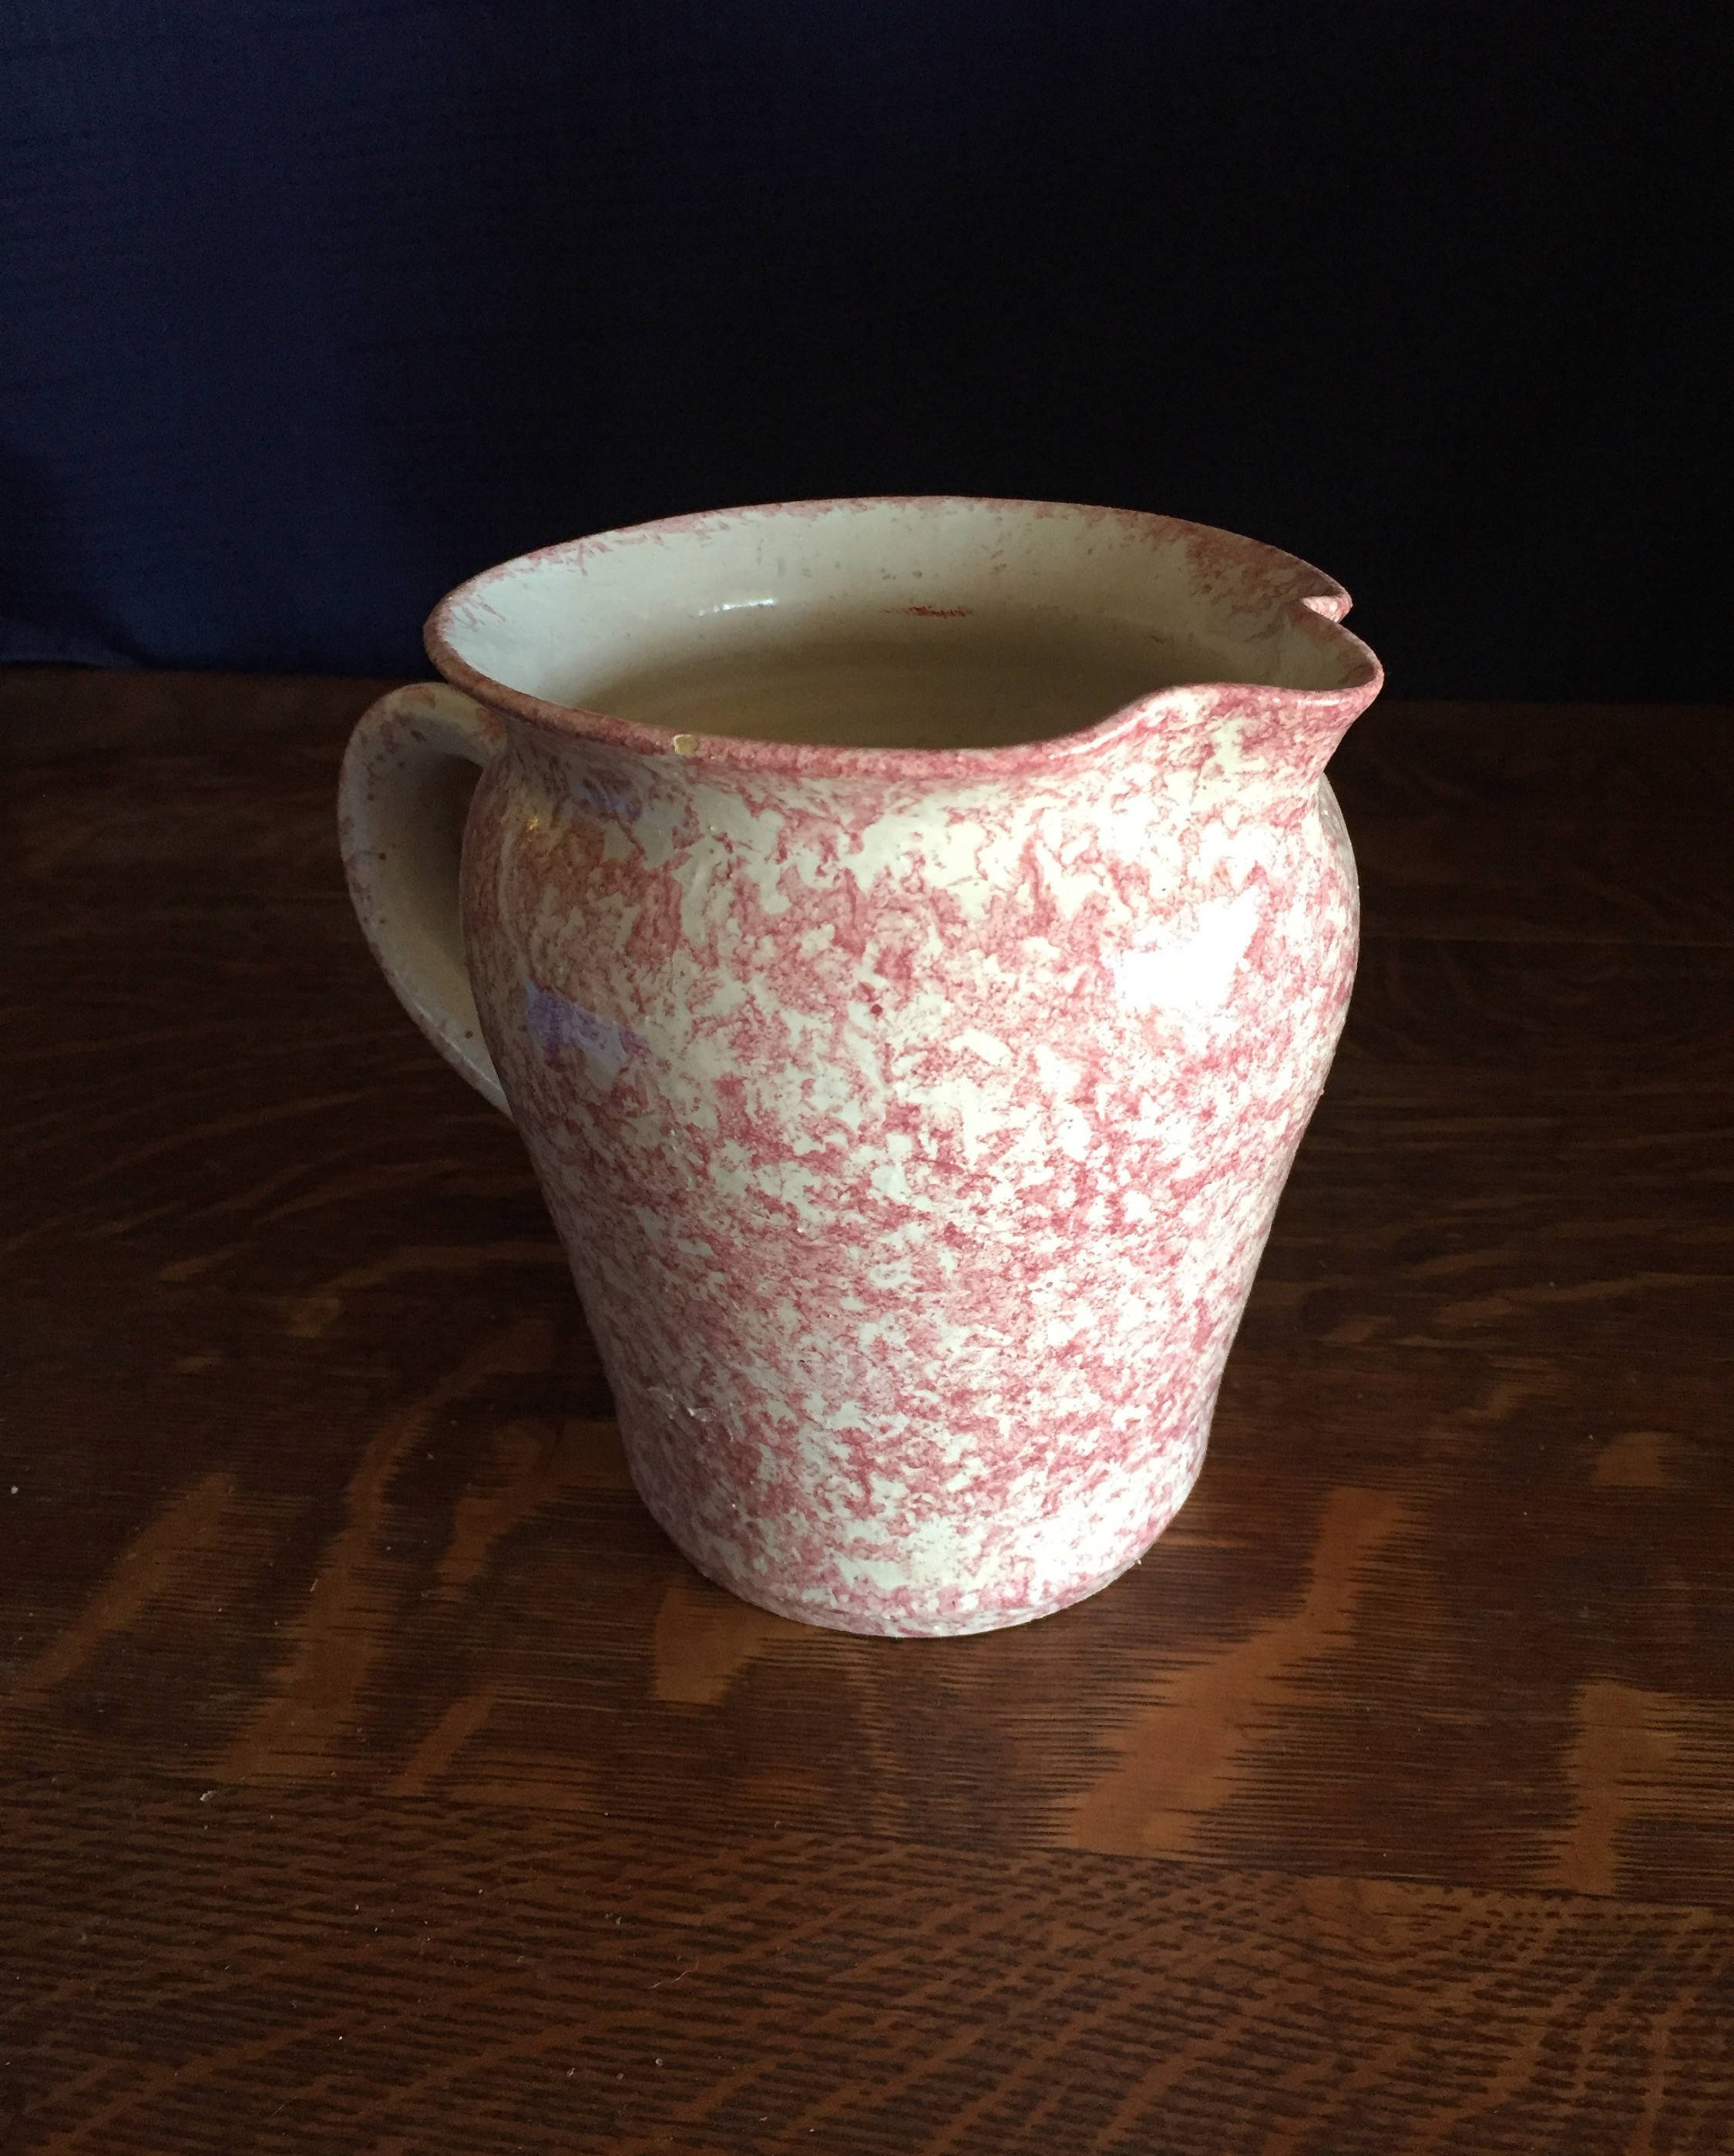 roseville pottery white rose vase of handmade pottery pitcher pink sponge painted glaze vintage etsy regarding dzoom